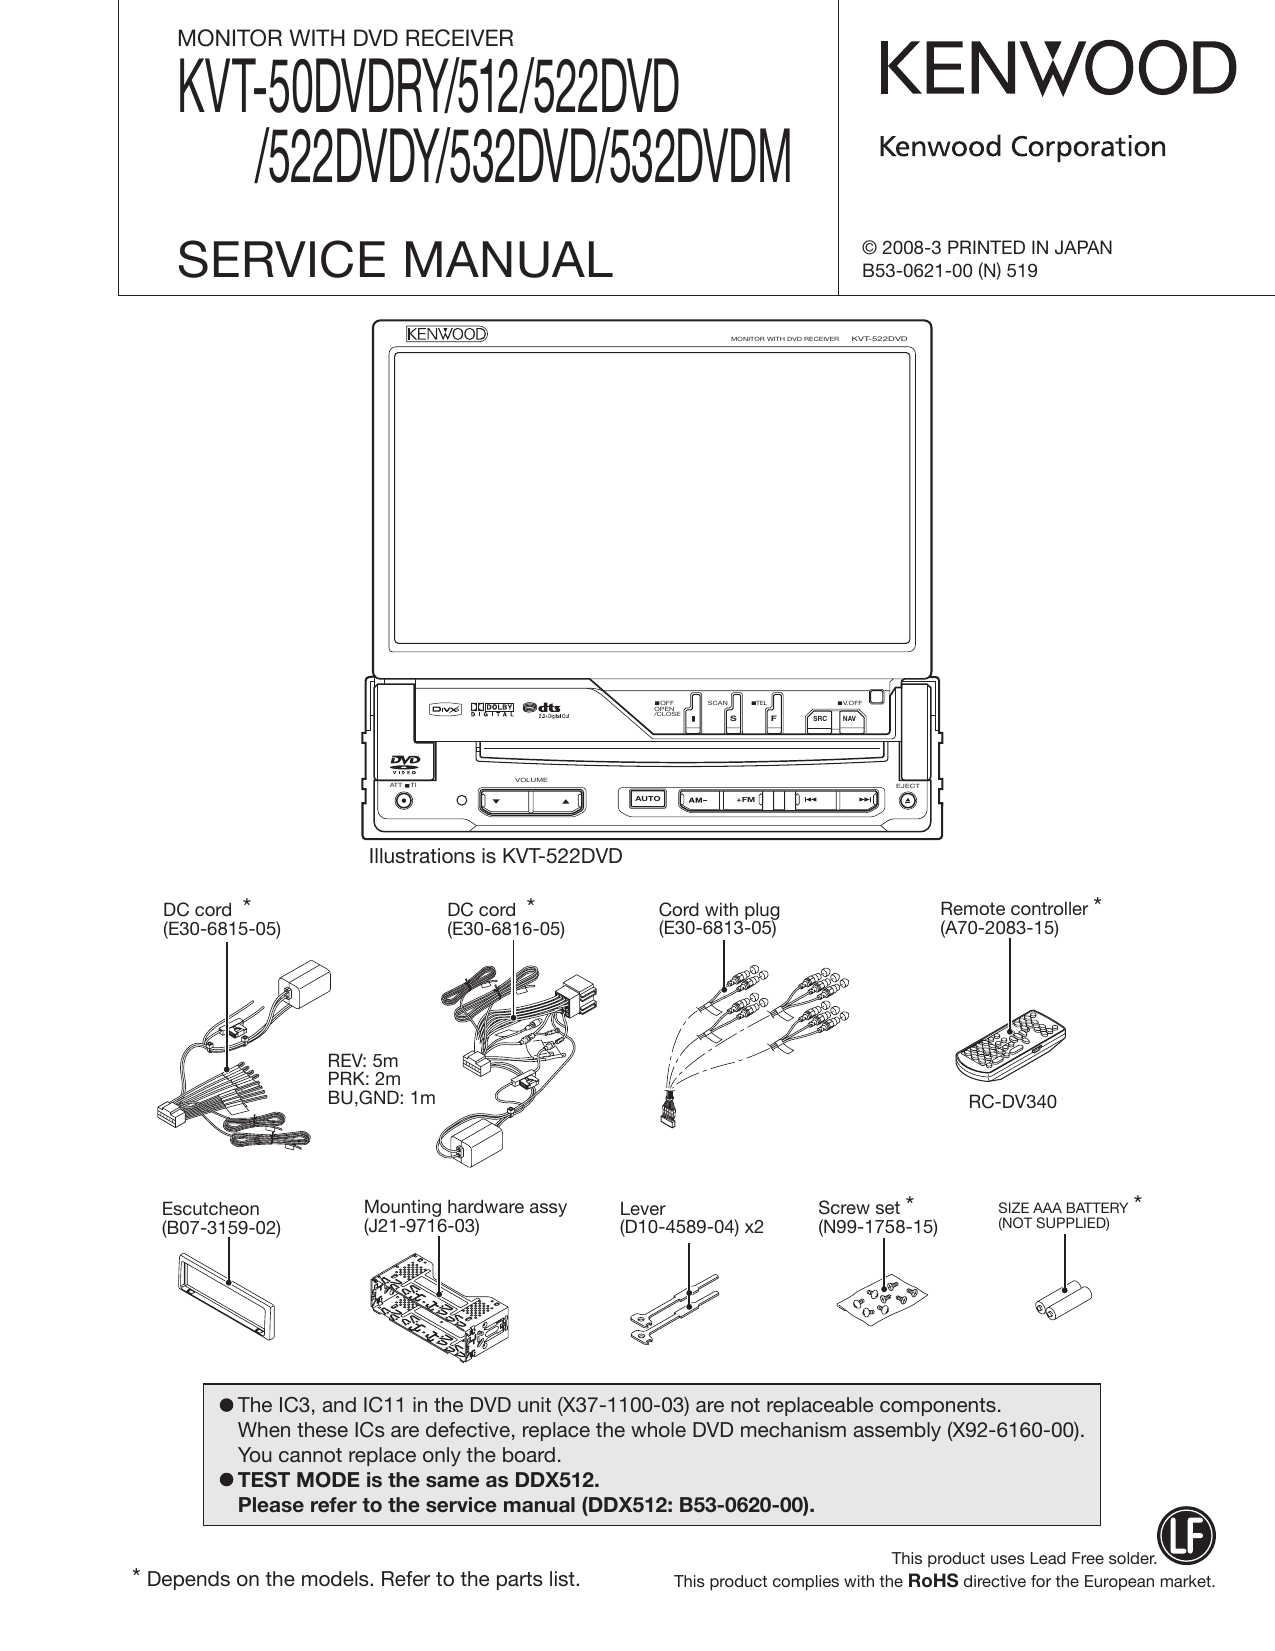 Kenwood KVT-522DVD, KVT-532DVDM Service Manual | Manualzz